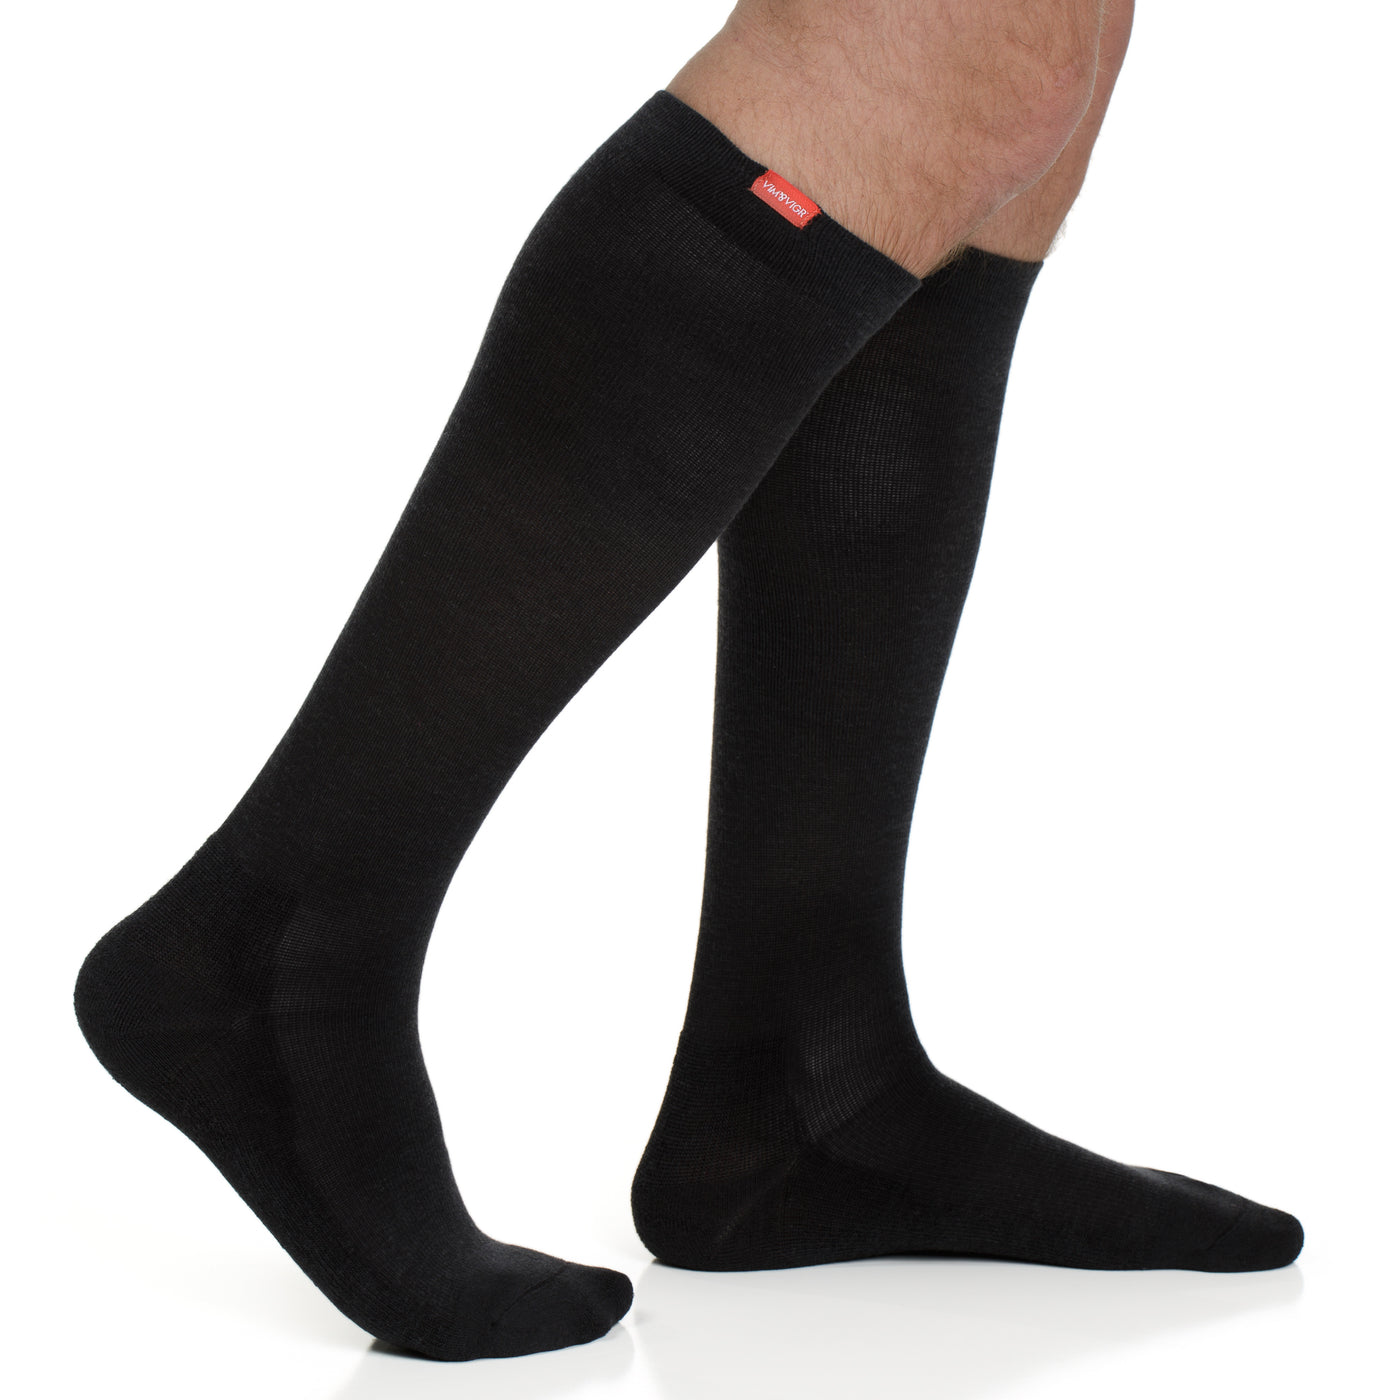 15-20 mmHg: Solid Black (Moisture-wick Nylon) compression socks for men & women